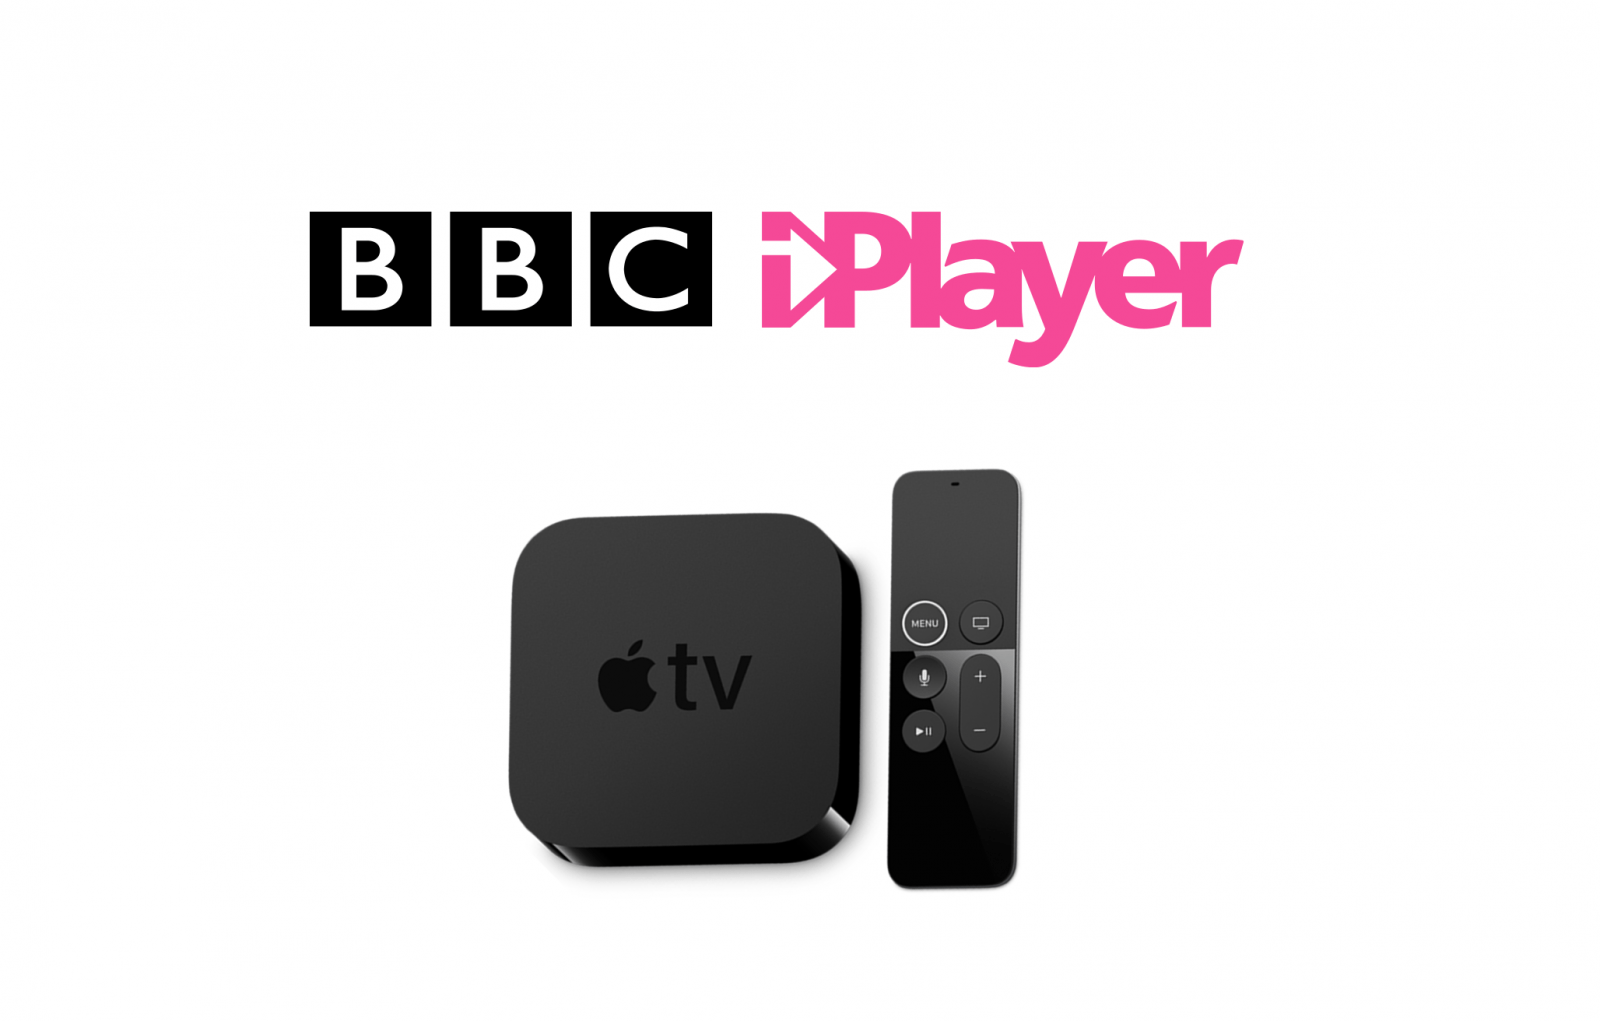 BBC iPlayer on Apple TV